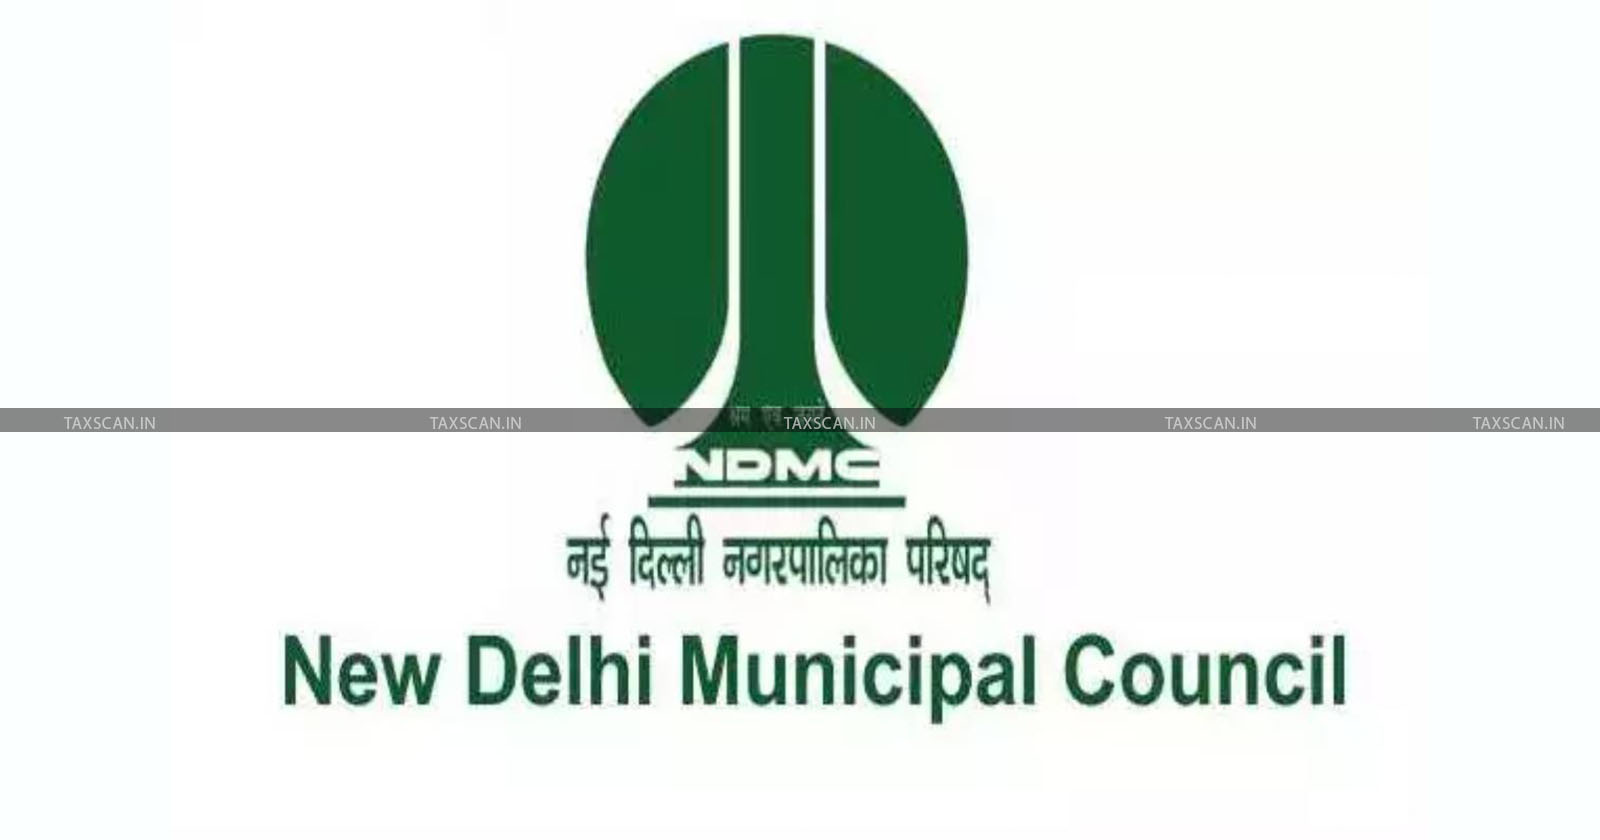 NDMC - New Delhi Municipal Council - Geo-Tag - TAXSCAN